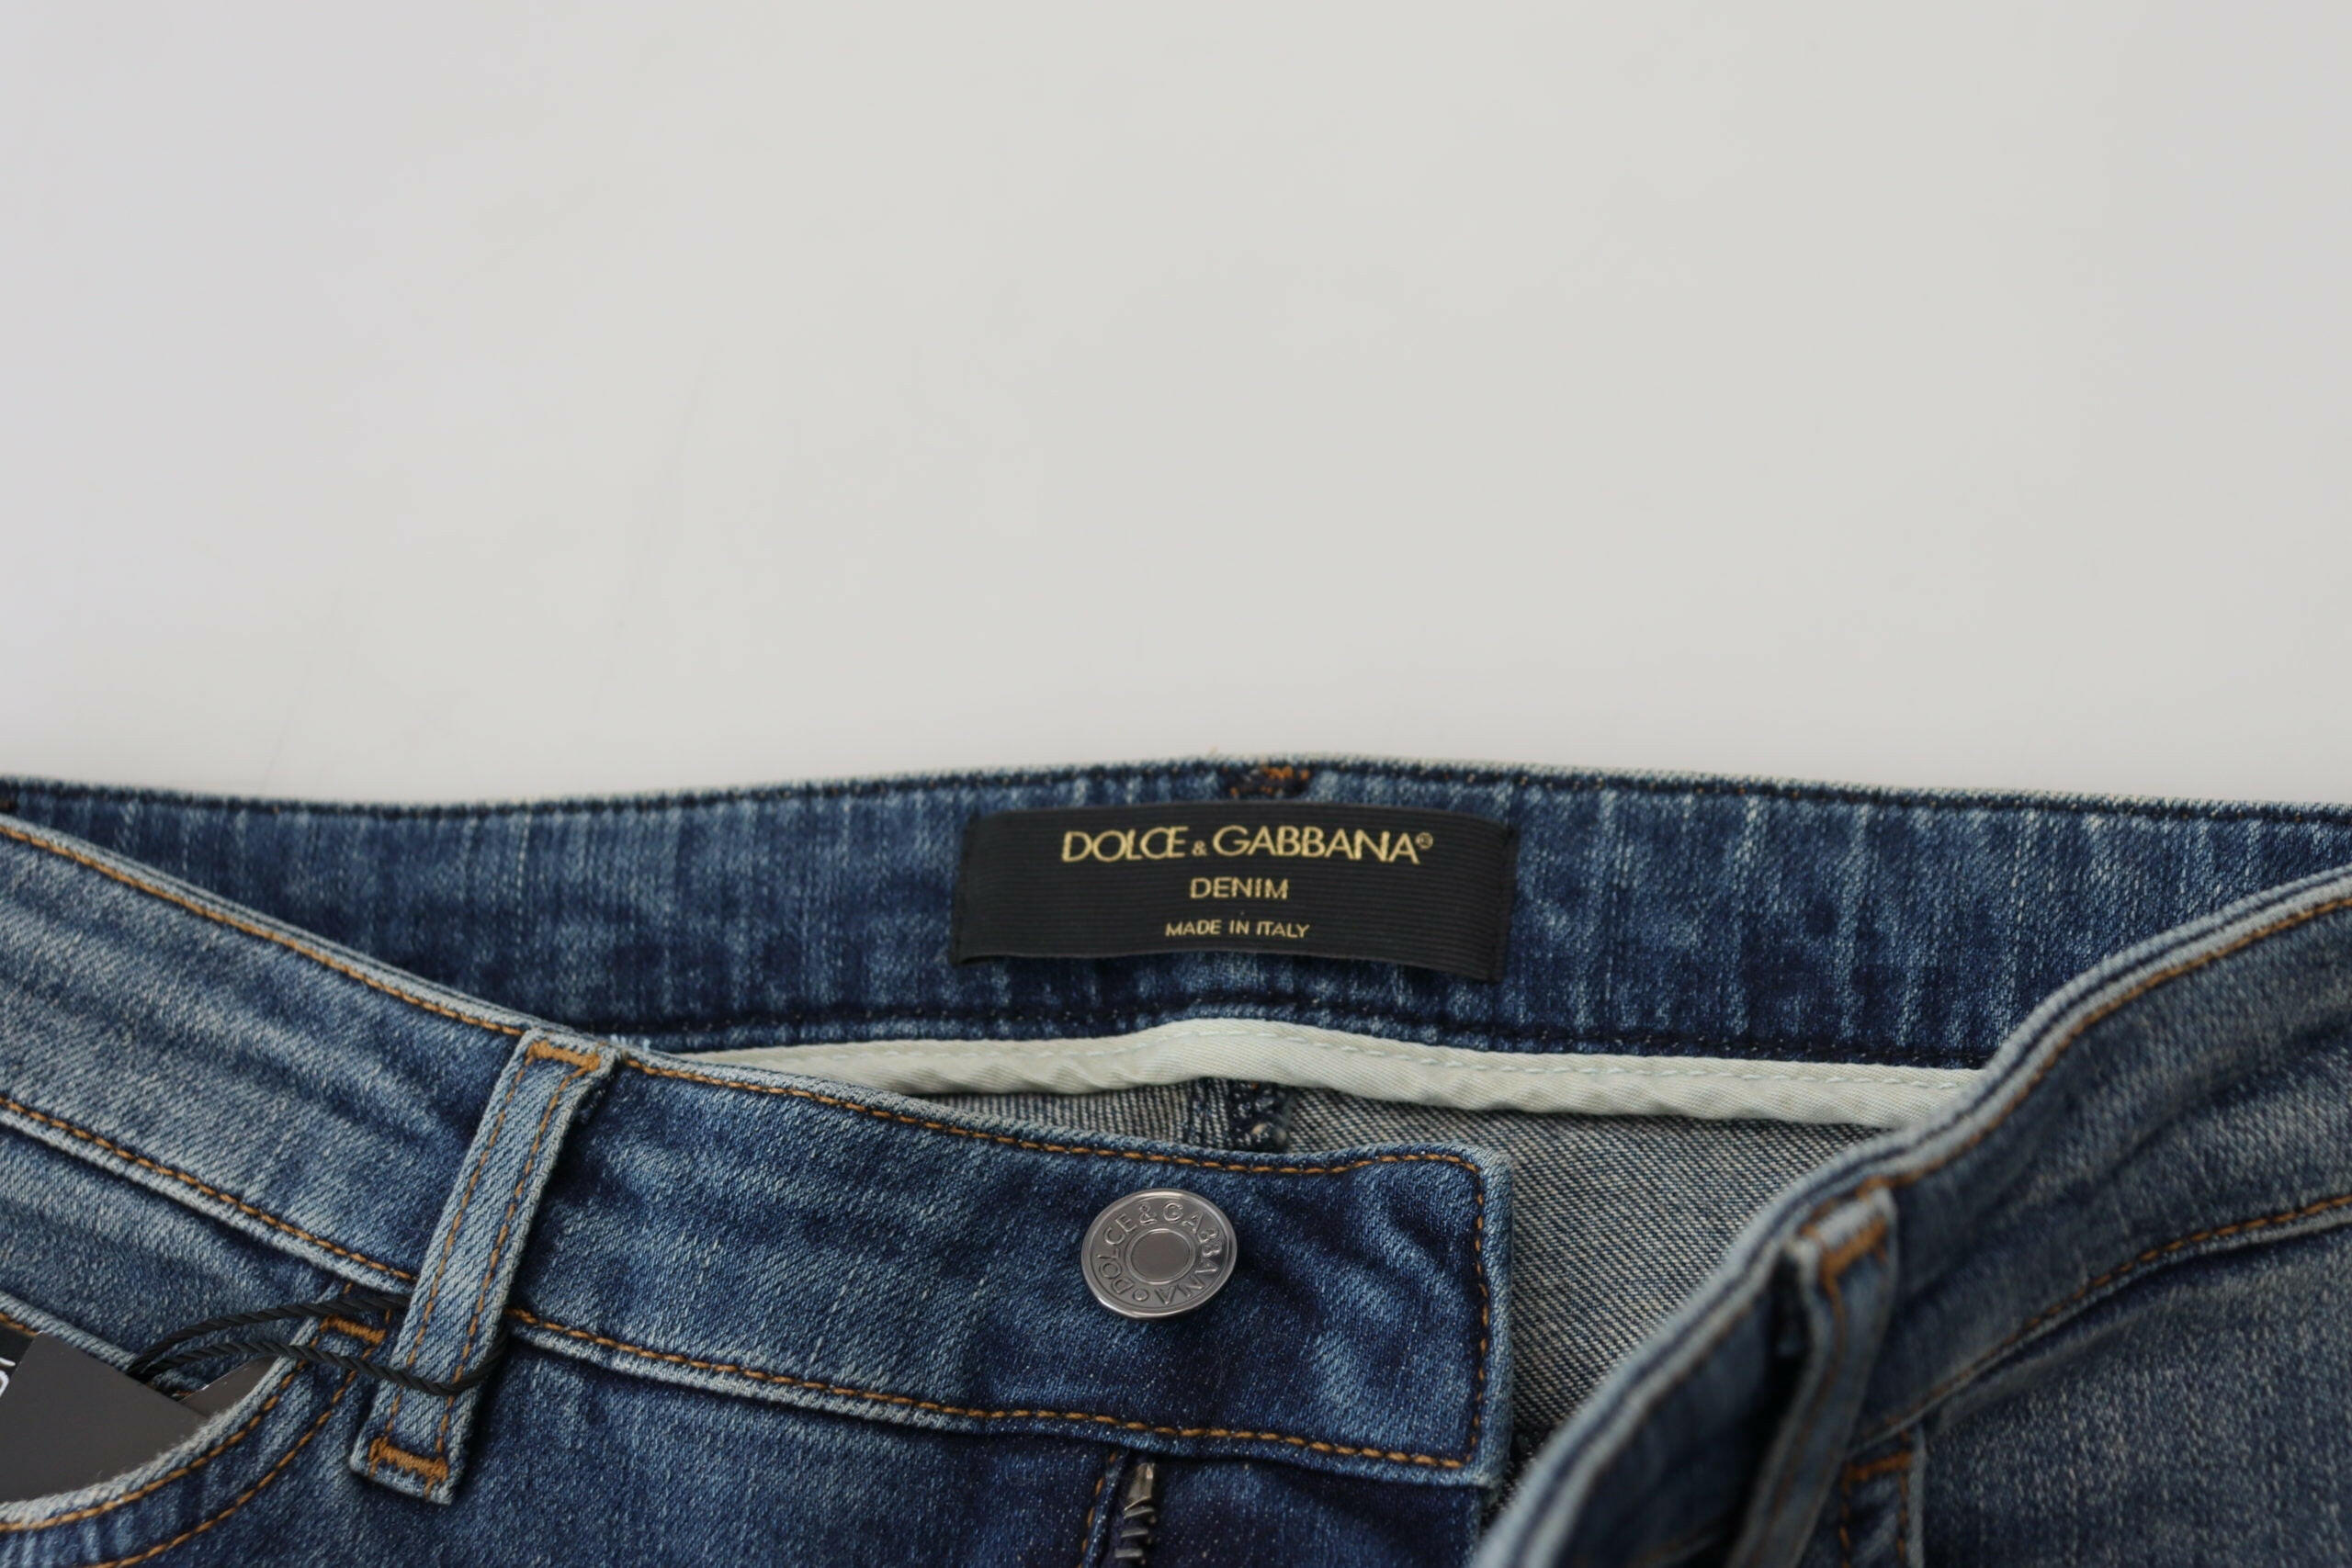 Dolce & Gabbana Blue Washed Cotton Tattered Denim Jeans - GENUINE AUTHENTIC BRAND LLC  